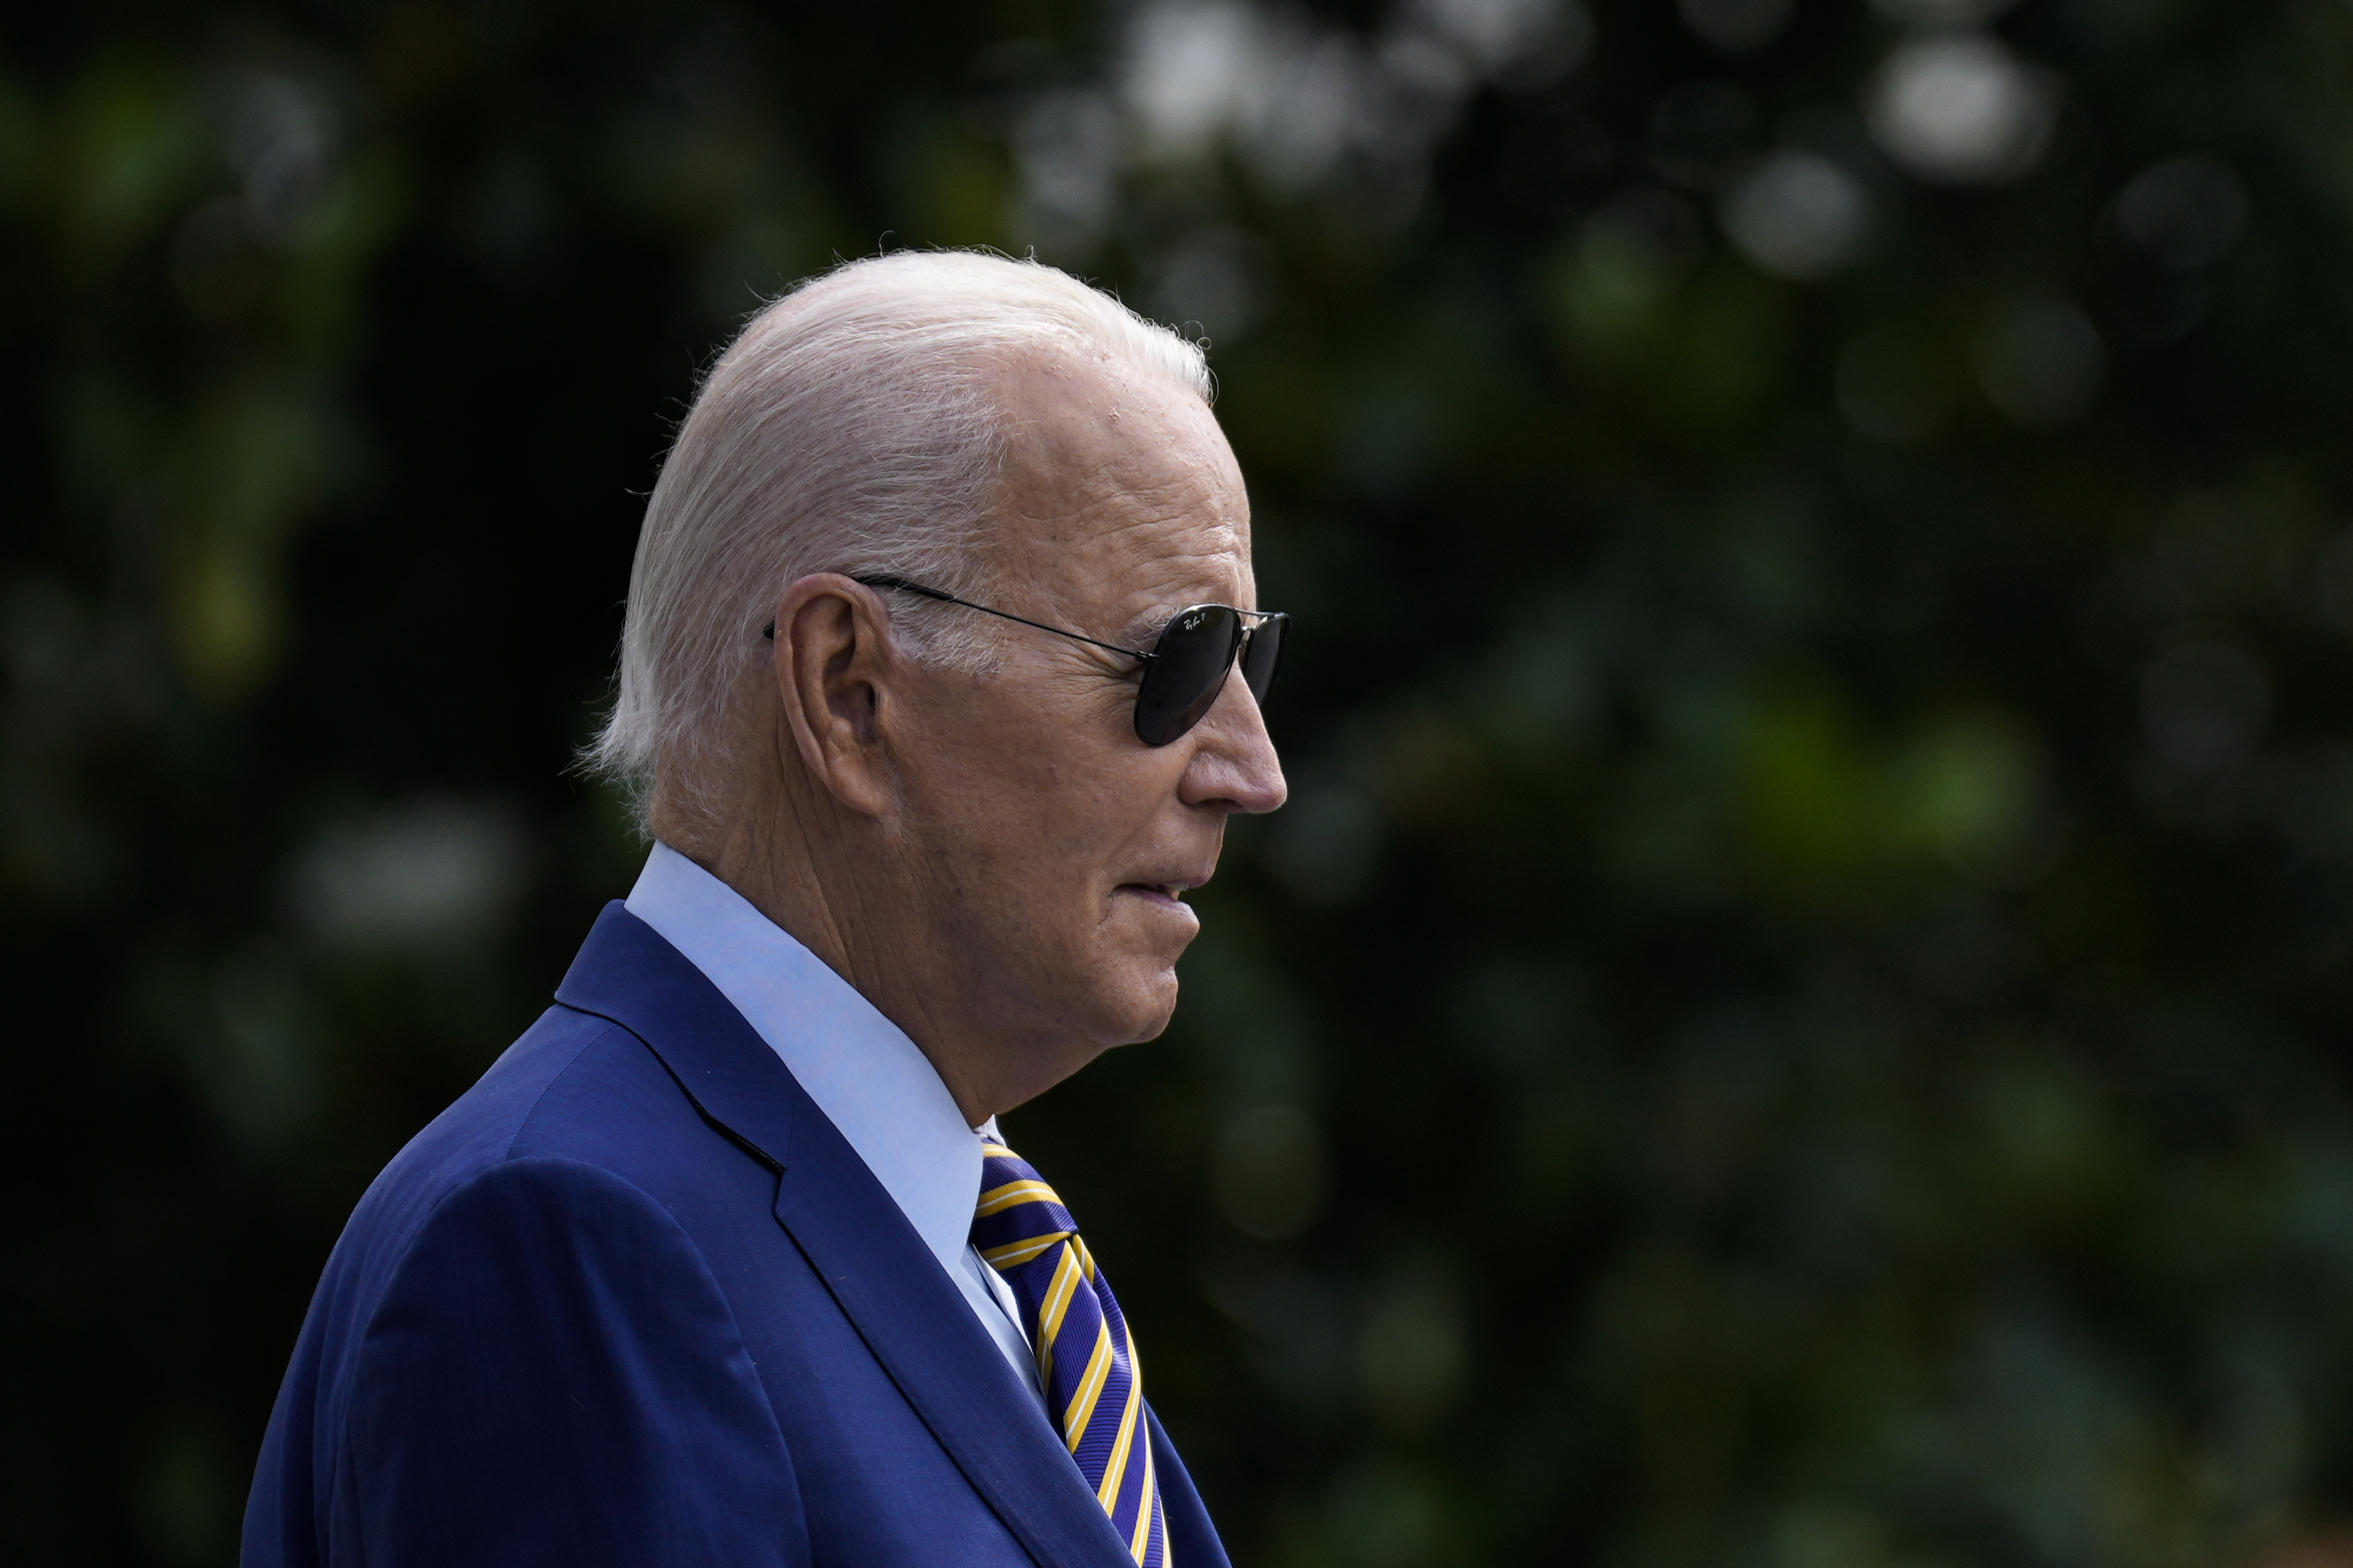 A profile shot of Biden wearing sunglasses